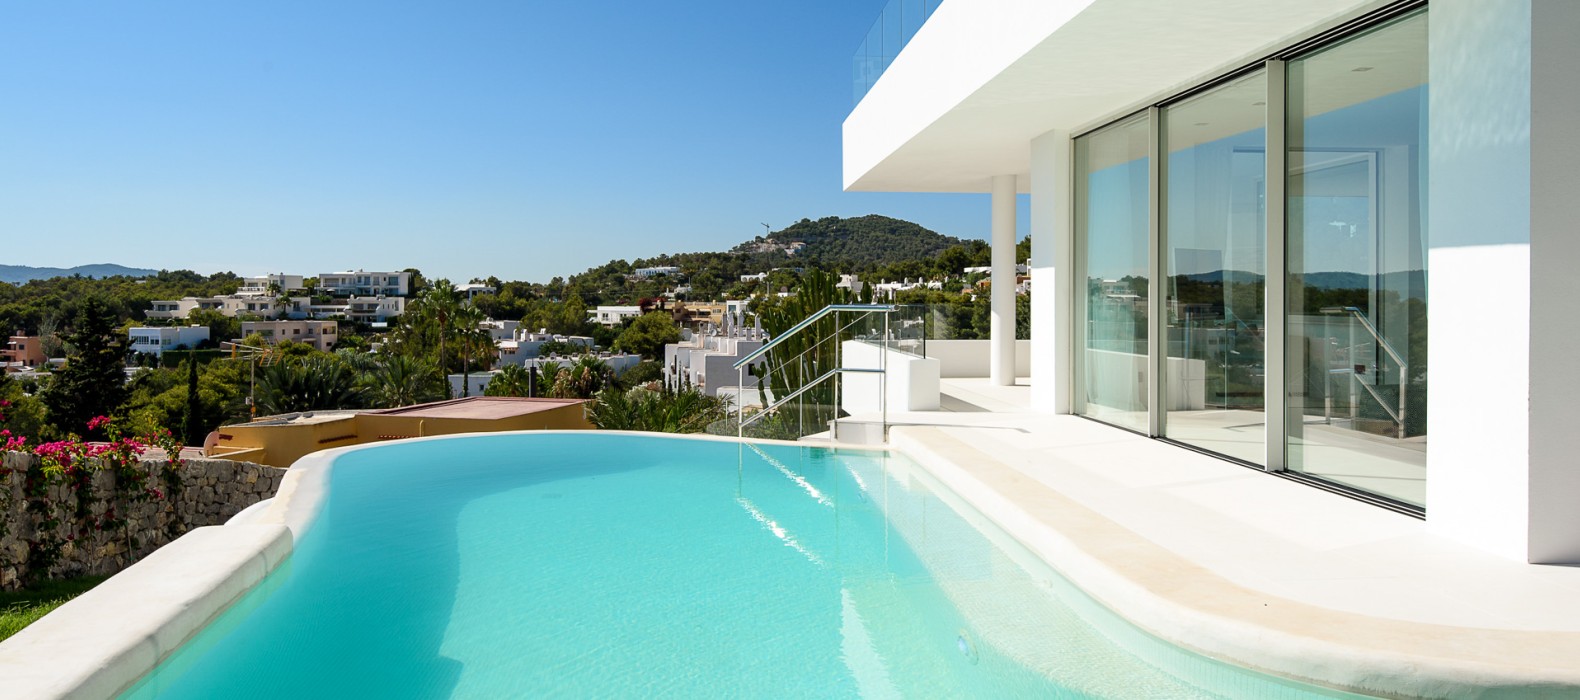 Pool and villa exterior view of Villa Triple X in Ibiza